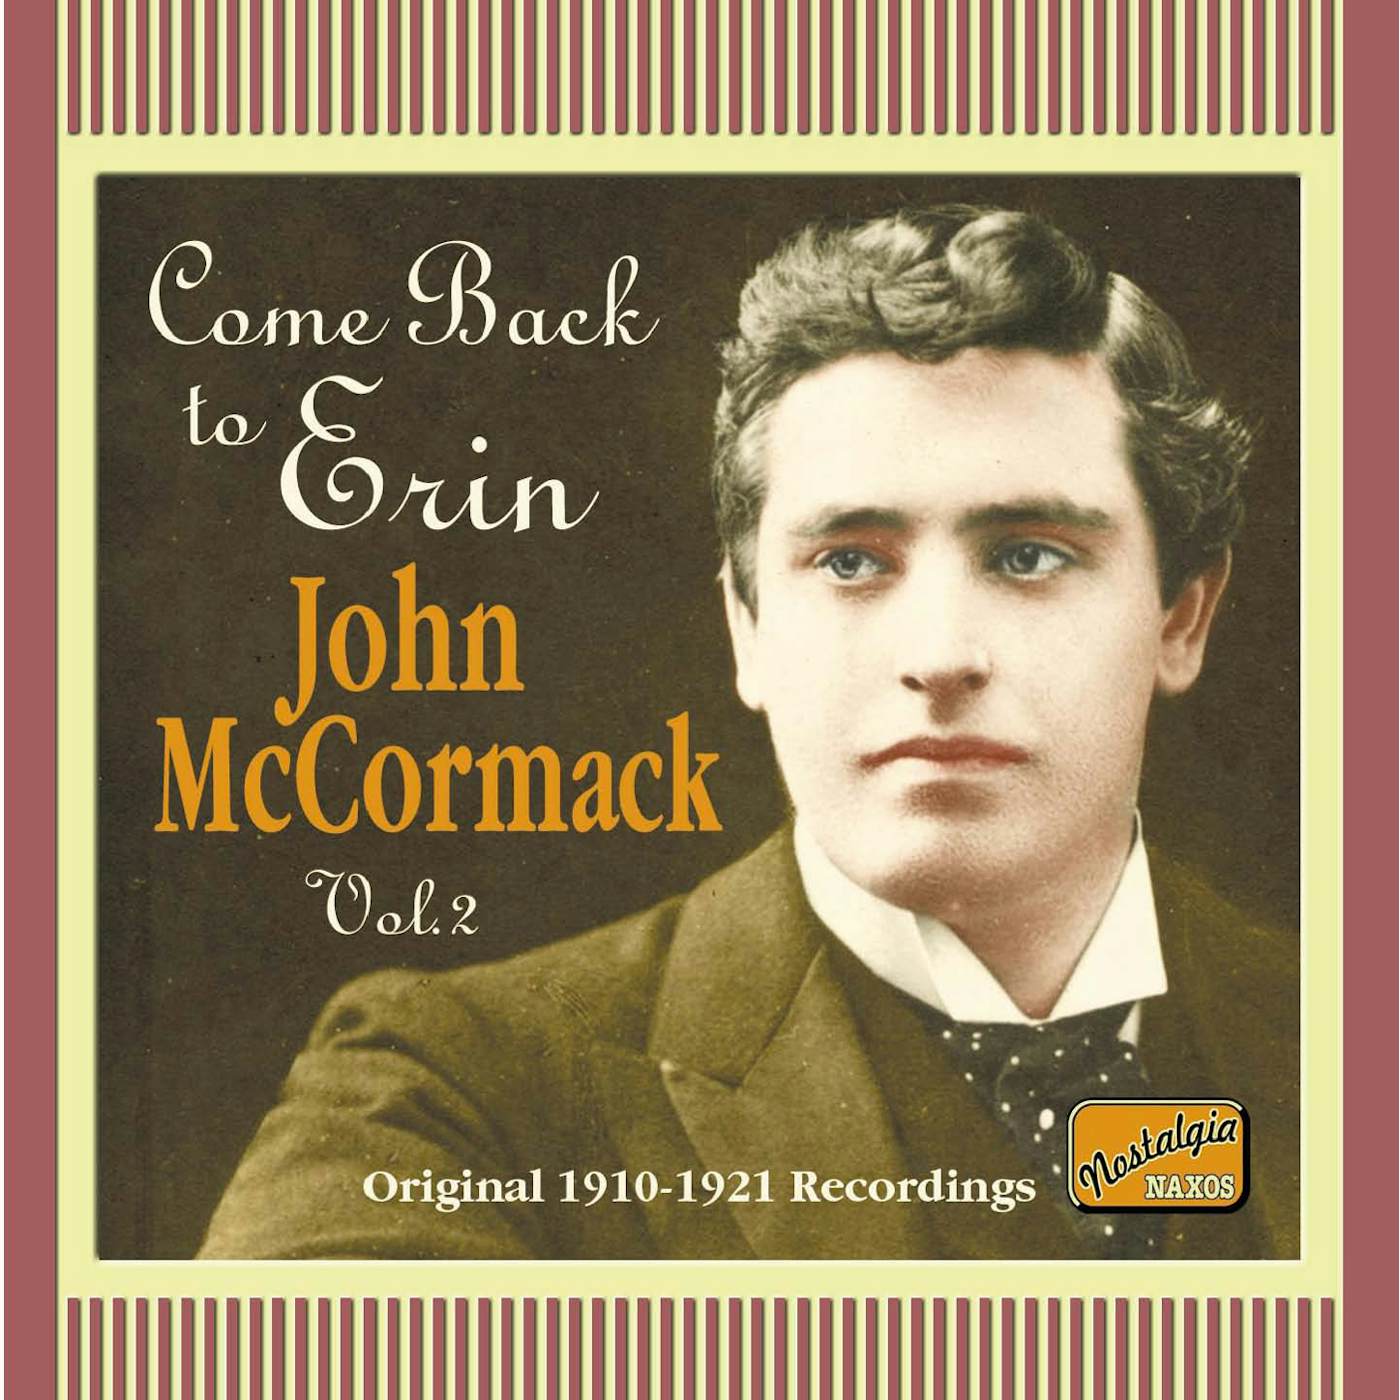 John McCormack COME BACK TO ERIN CD